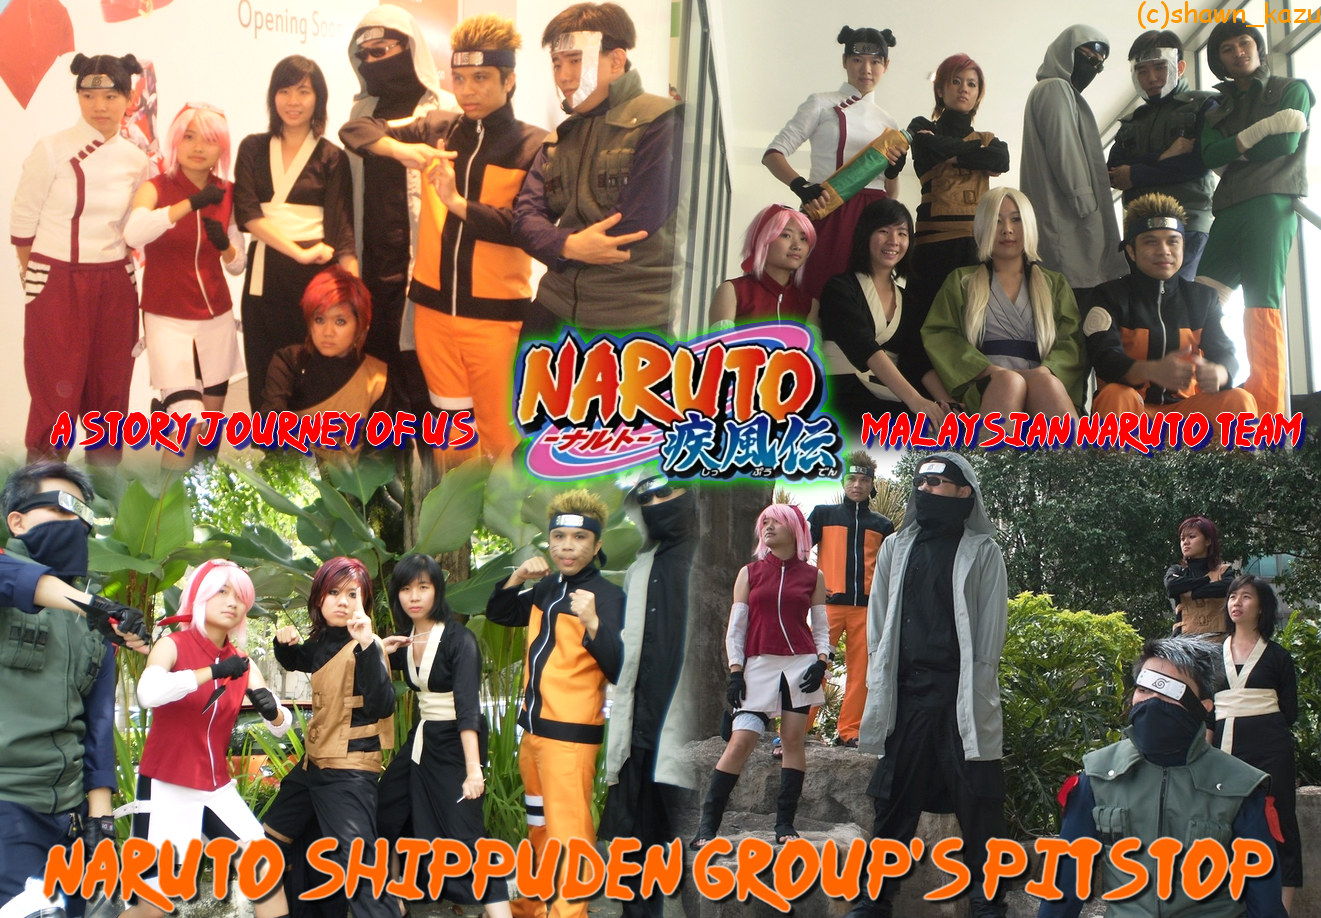 Naruto Shippuden Group's Pitstop